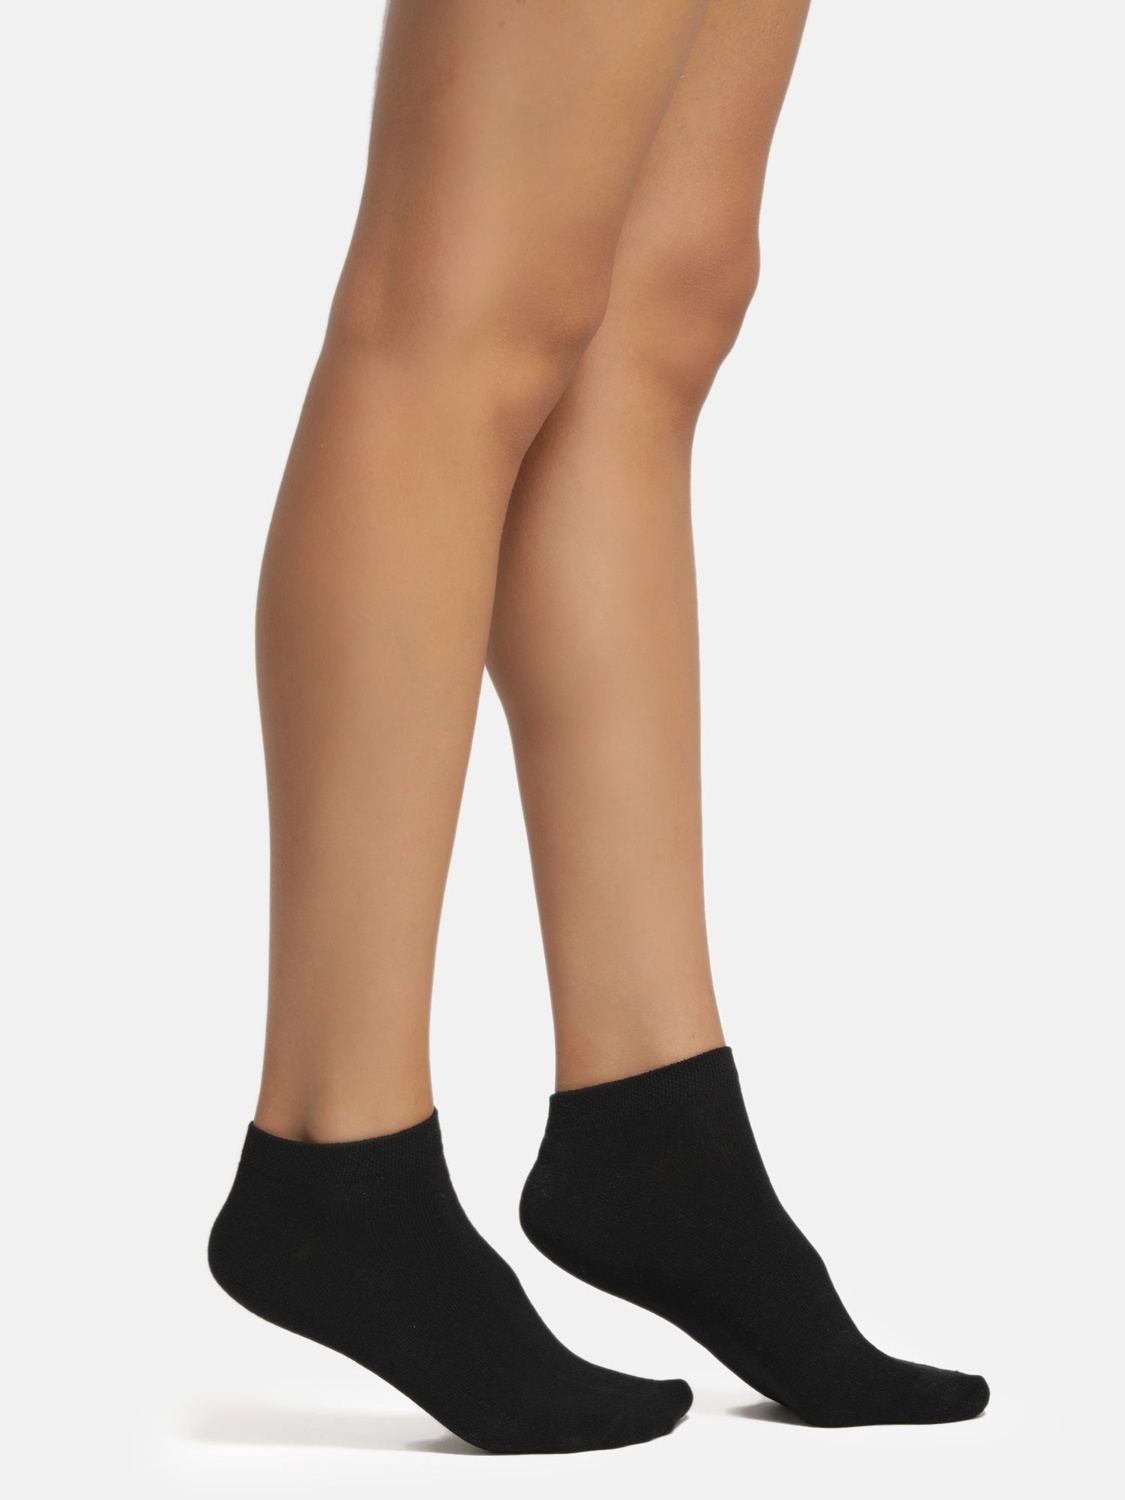 Low Ankle Length Socks - Black